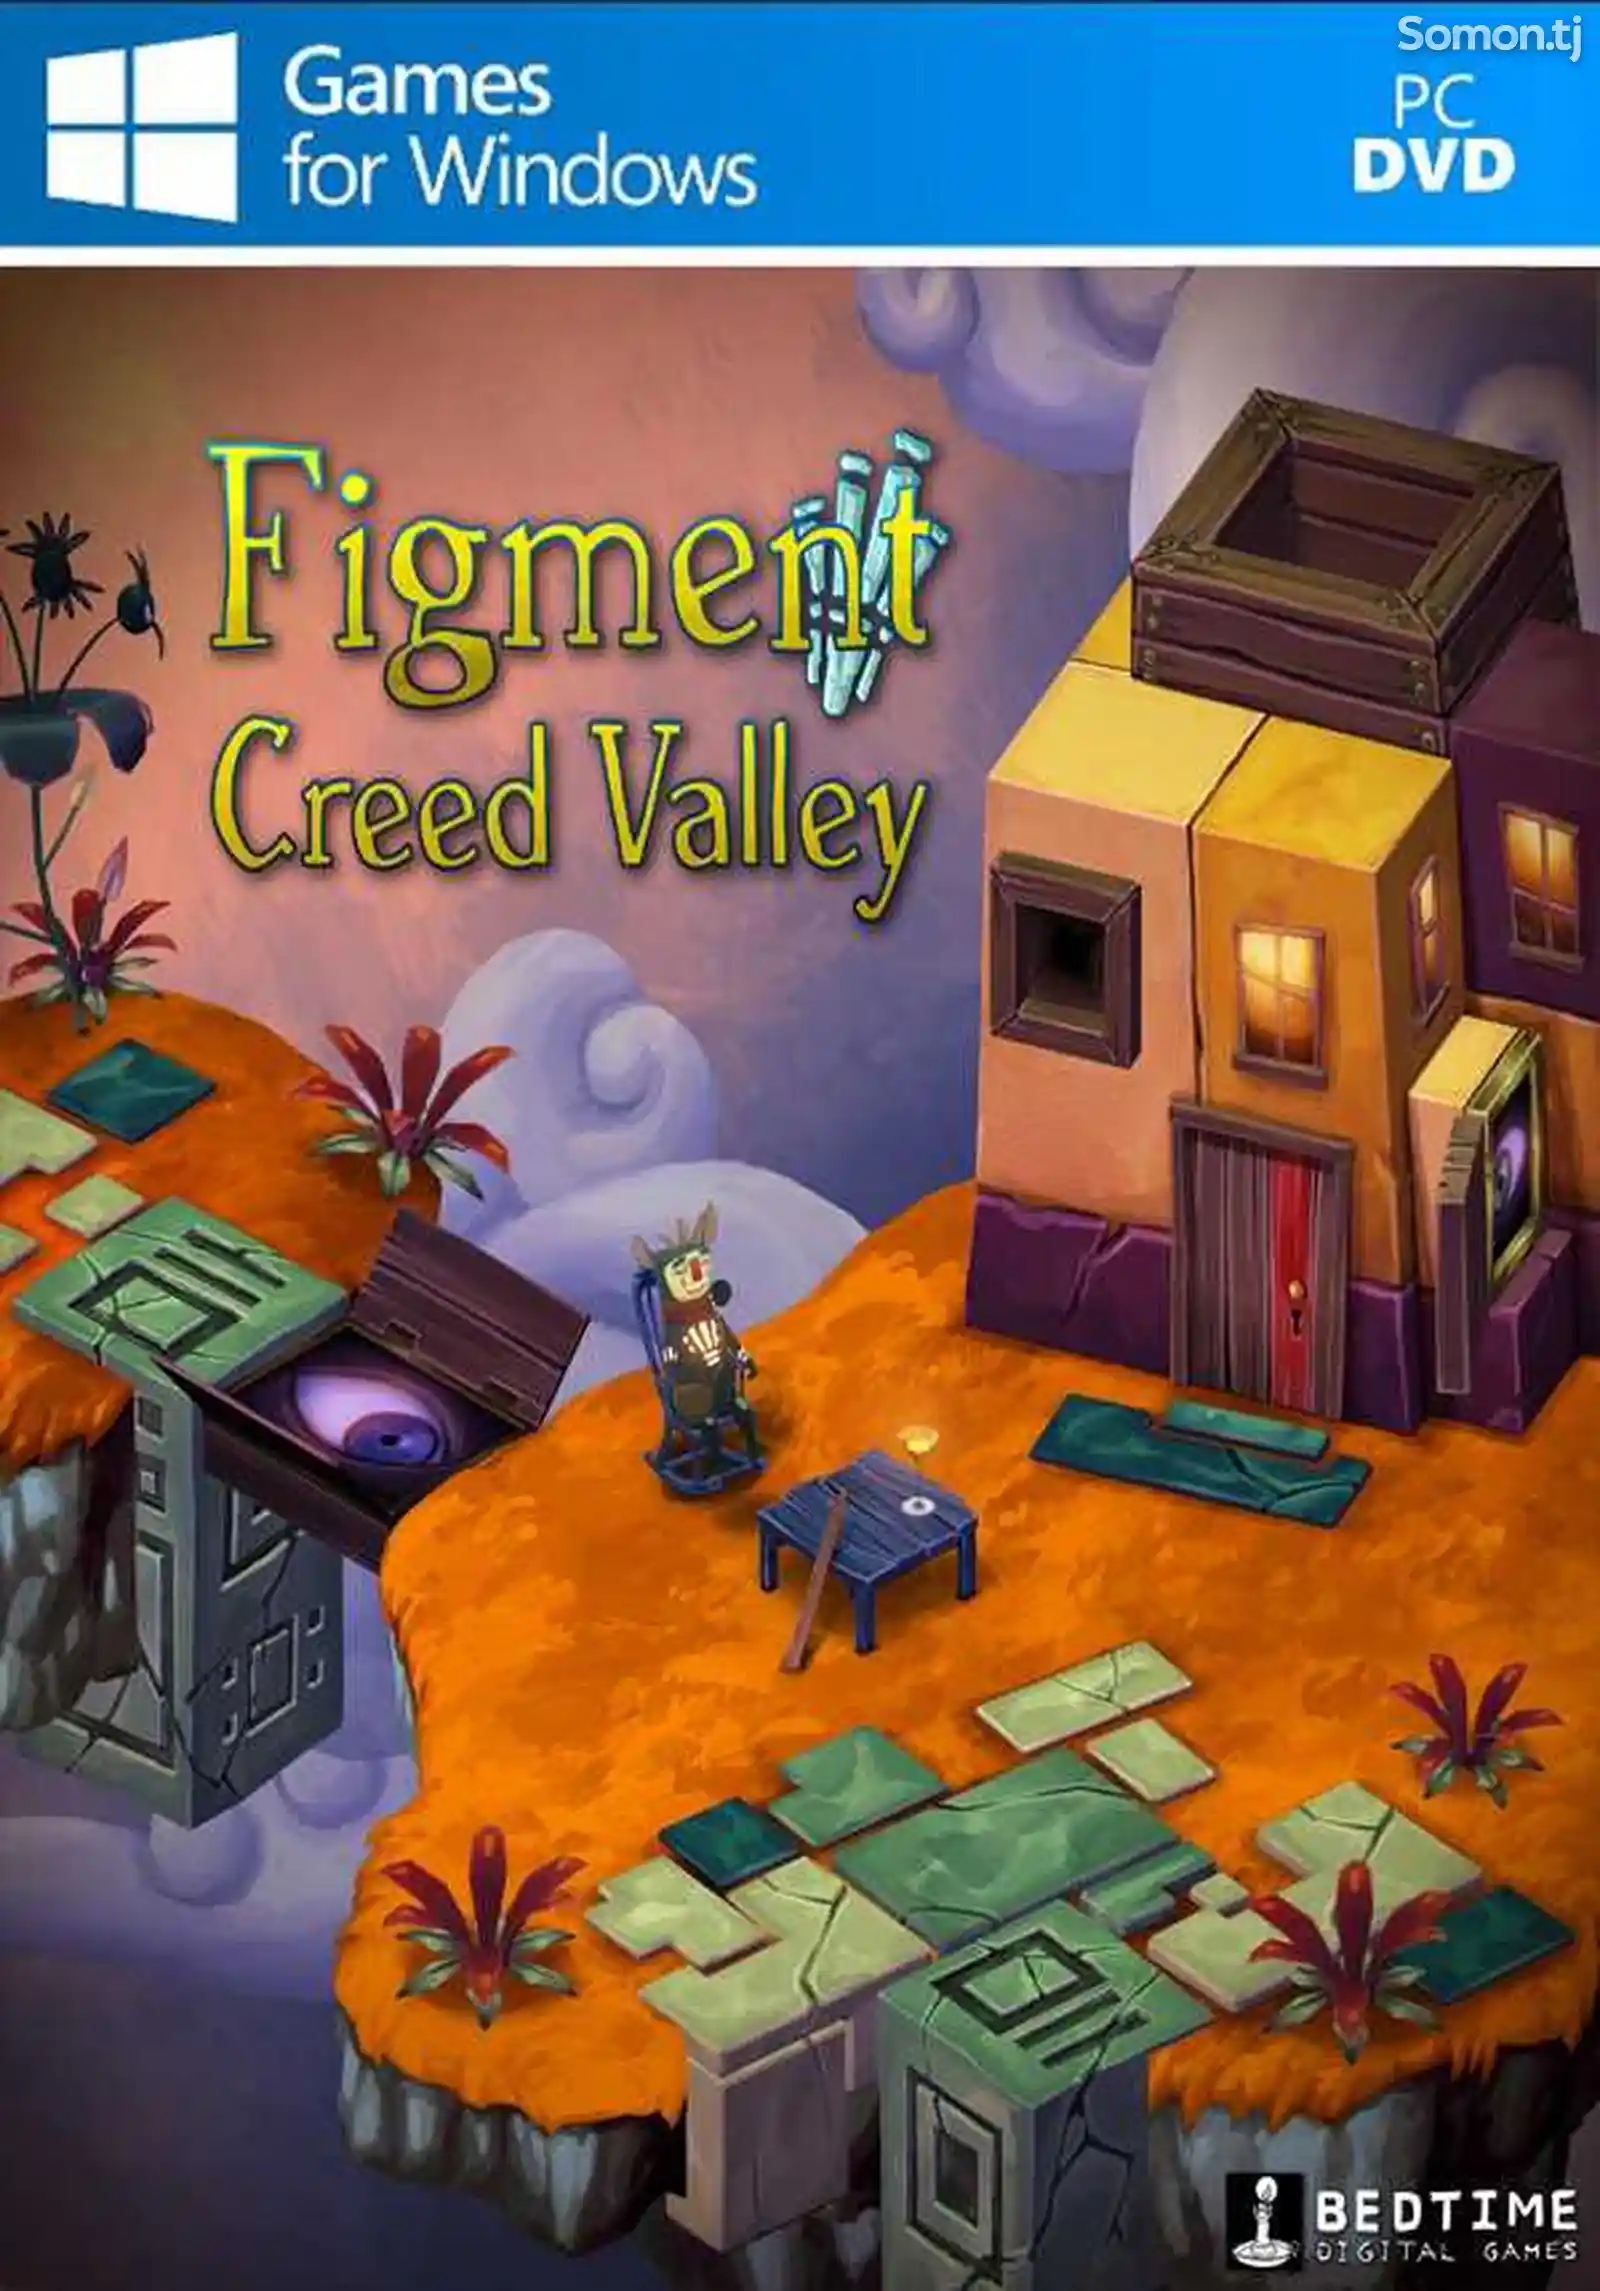 Игра Figment creed valley для компьютера-пк-pc-1